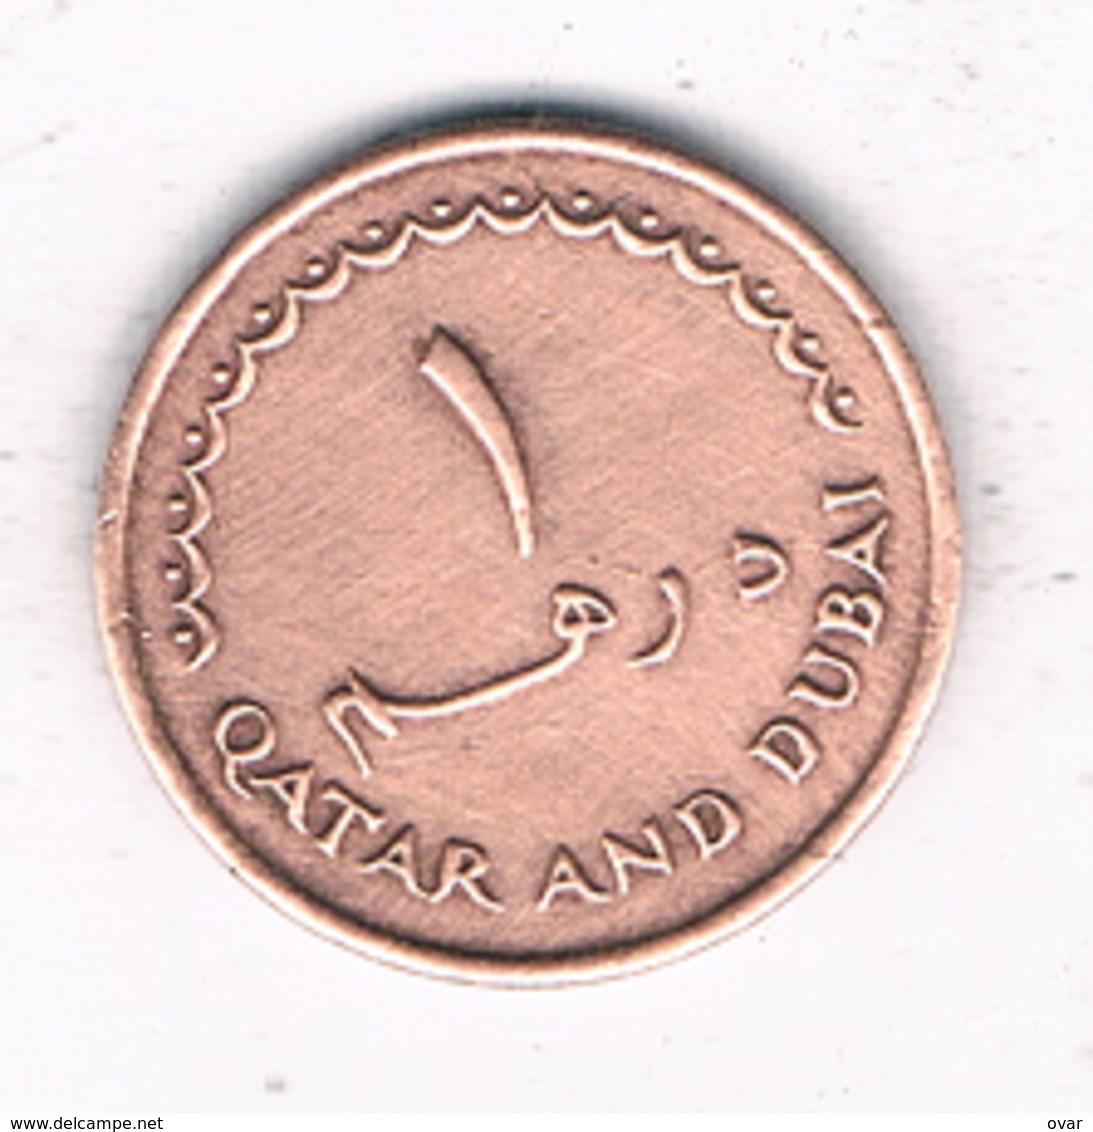 1 DIRHAM 1966 QATAR AND DUBAI /0384/ - Qatar